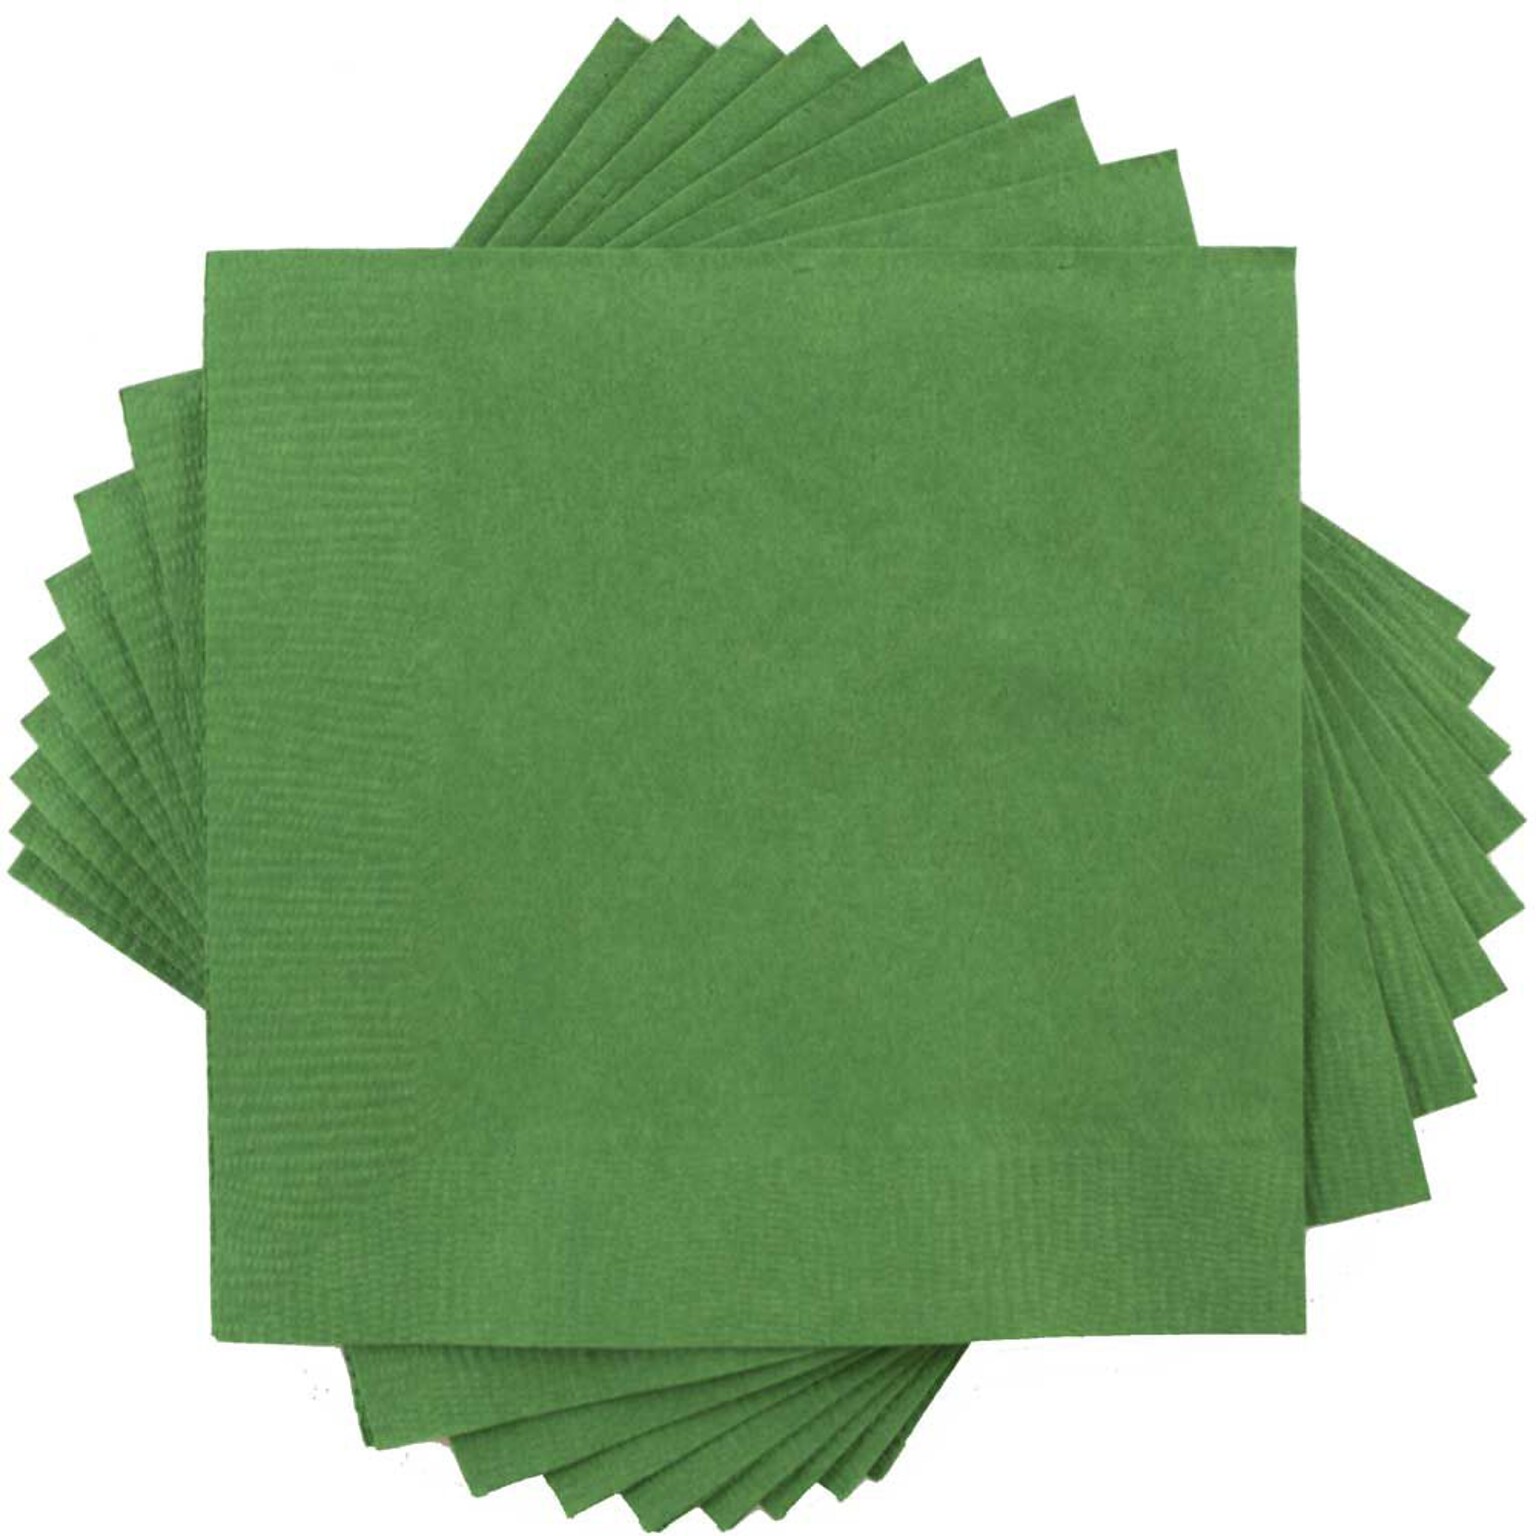 JAM Paper Beverage Napkin, 2-ply, Green, 50 Napkins/Pack (255628199)